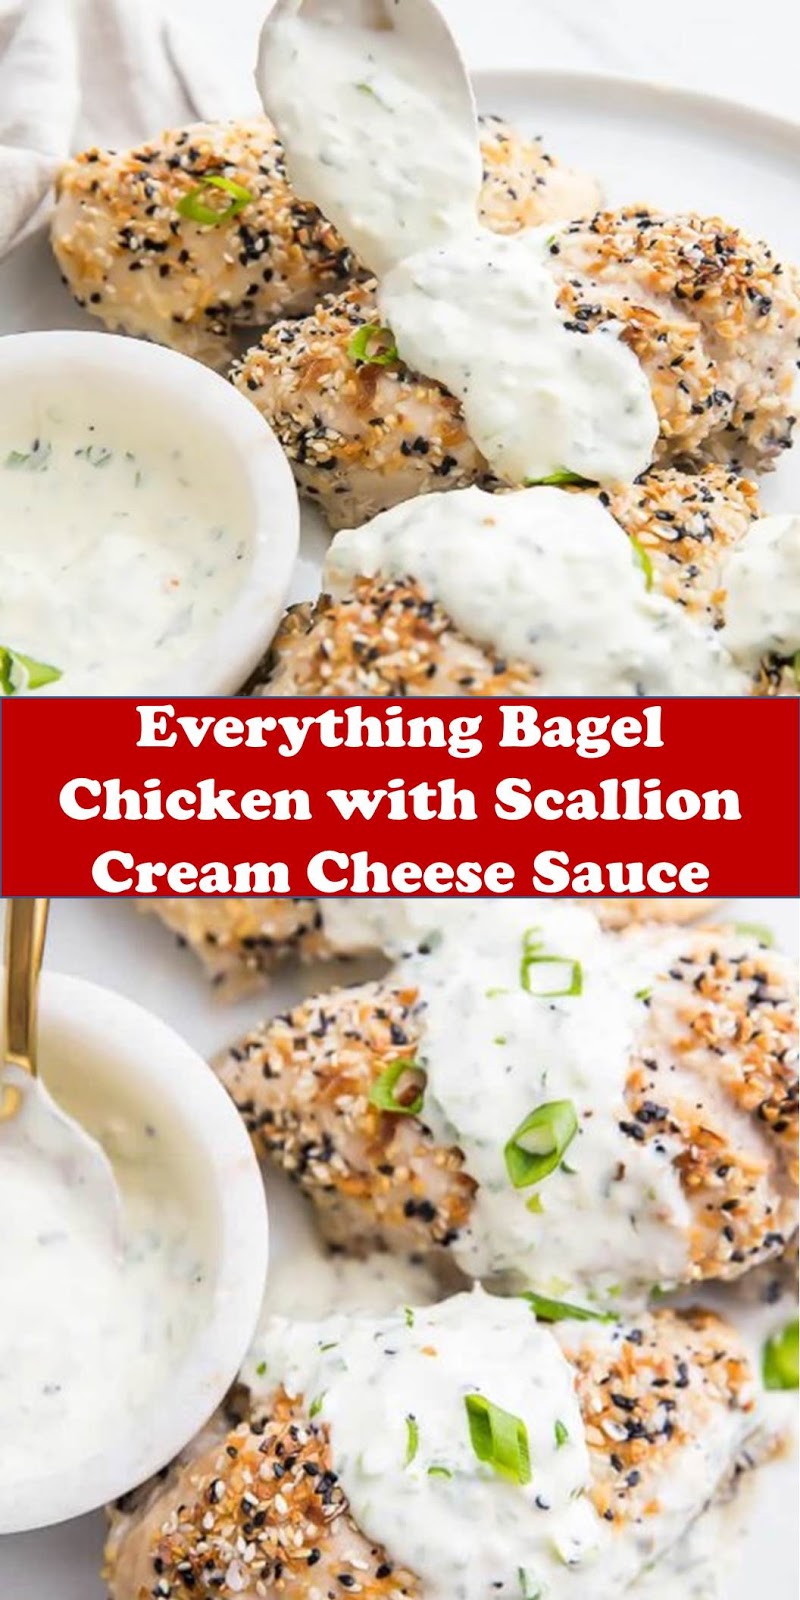 #Everything #Bagel #Chicken #with #Scallion #Cream #Cheese #Sauce